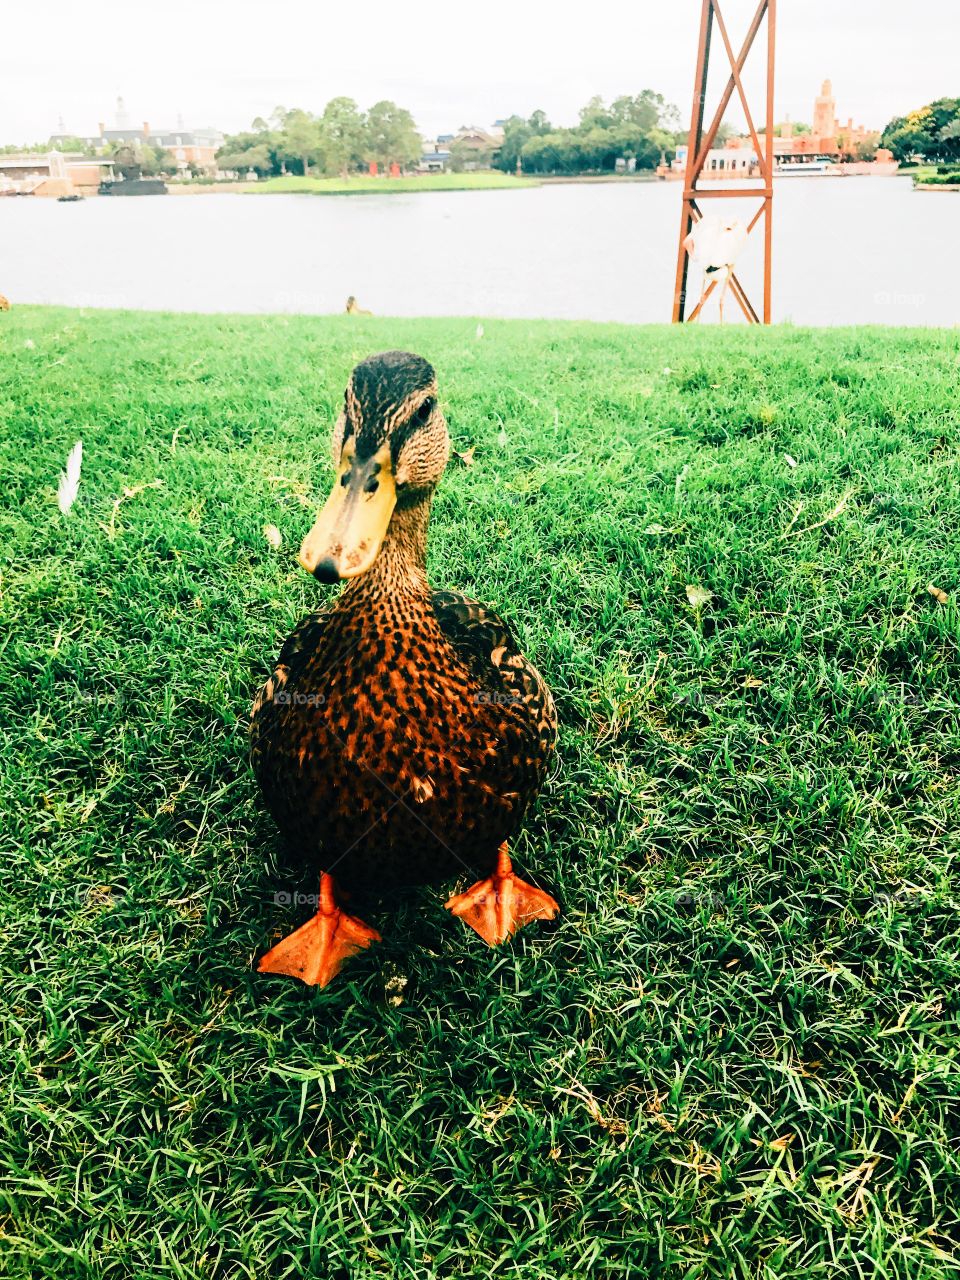 Disney duck at Epcot